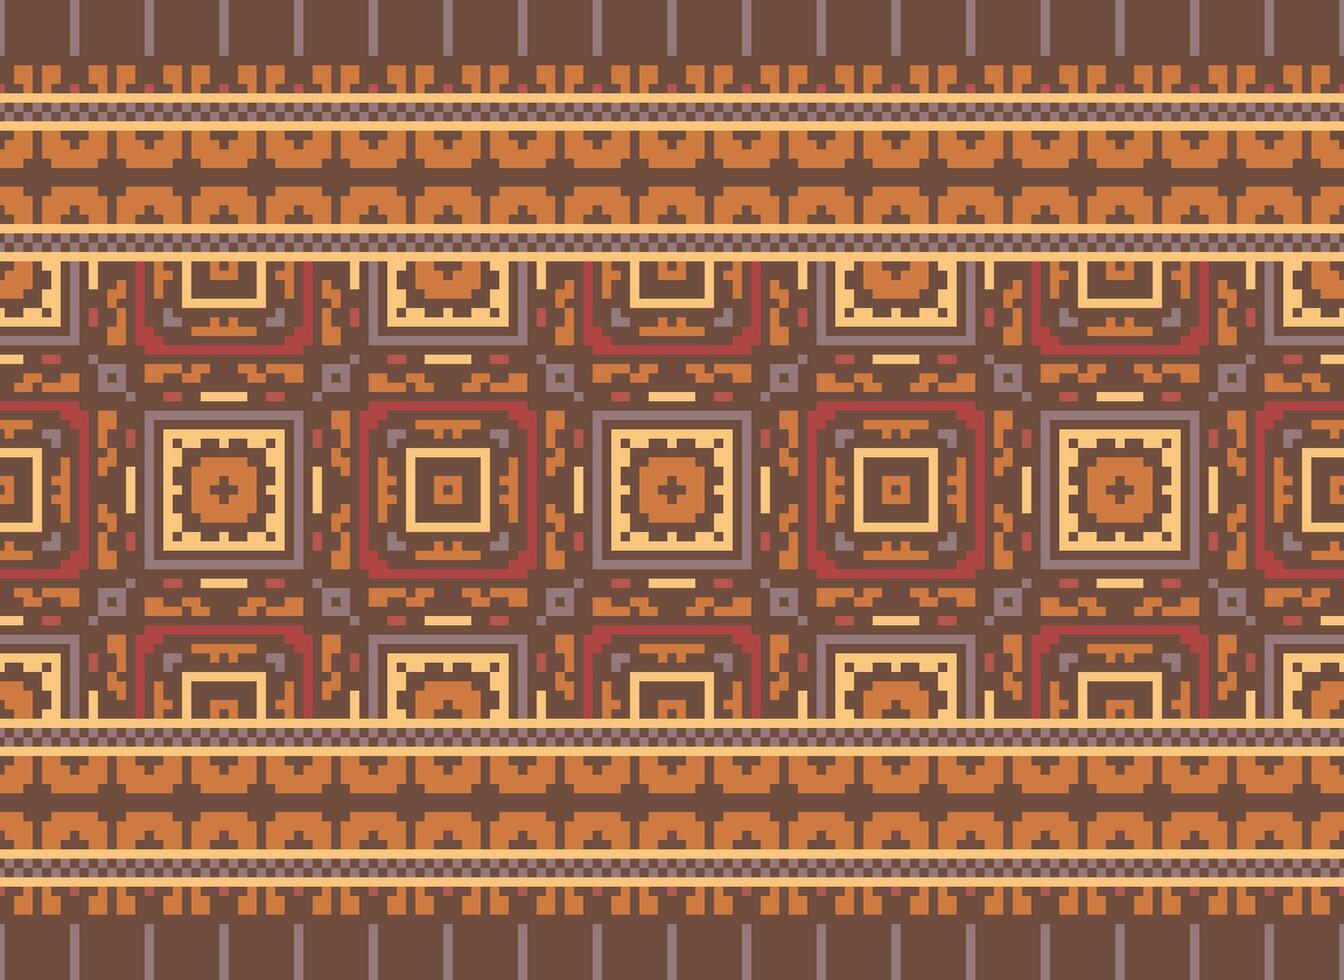 pixel ikat e Cruz ponto geométrico desatado padronizar étnico oriental tradicional. asteca estilo ilustração Projeto para tapete, papel de parede, roupas, invólucro, batik. vetor